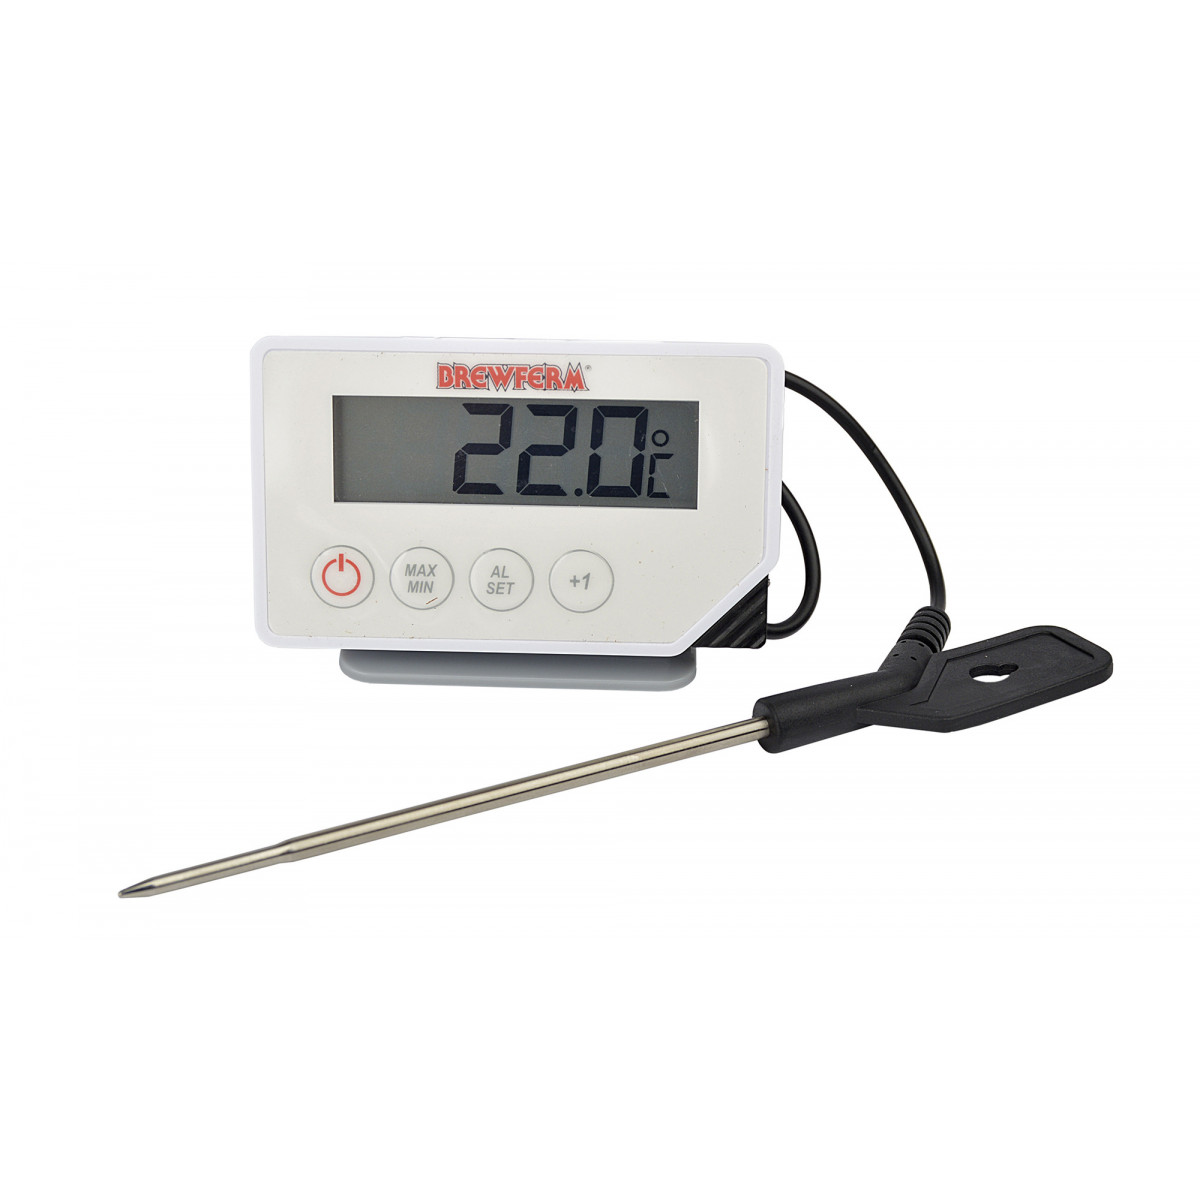 https://brouwland.com/20425-extra_large/digital-probe-thermometer-brewferm.jpg